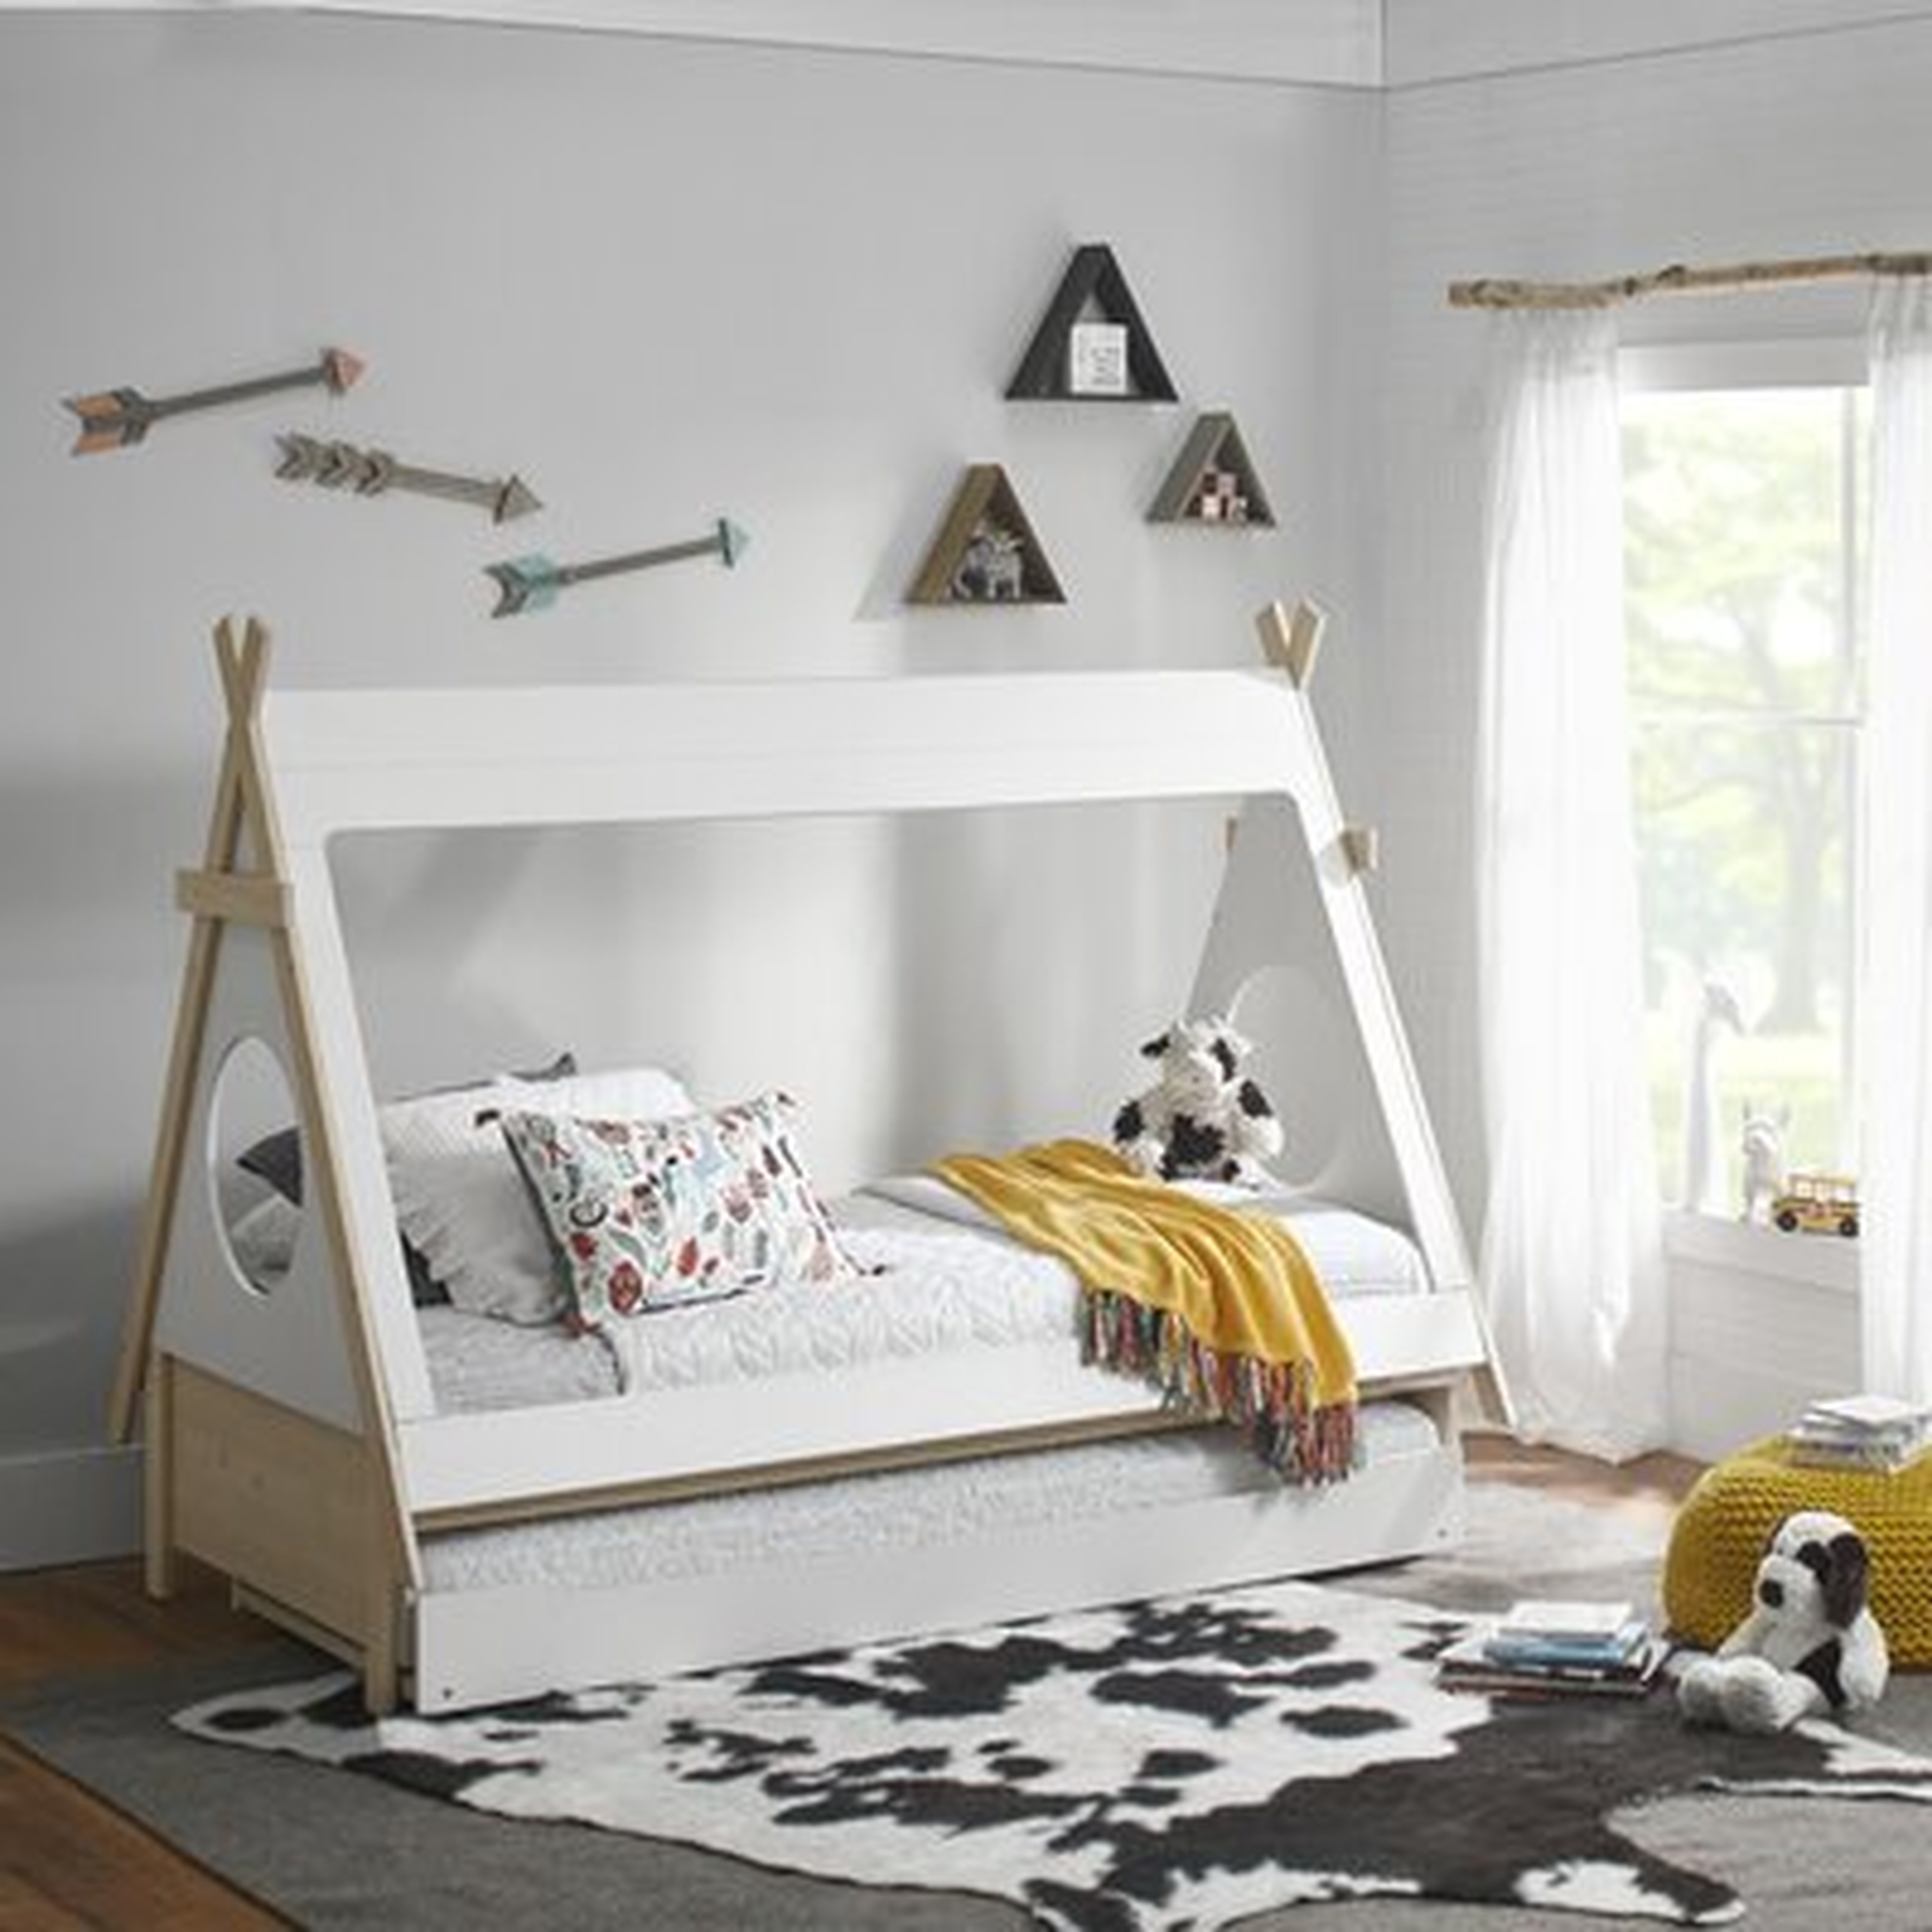 Sahara Triangular Play Tent Twin Bed with Trundle - Wayfair